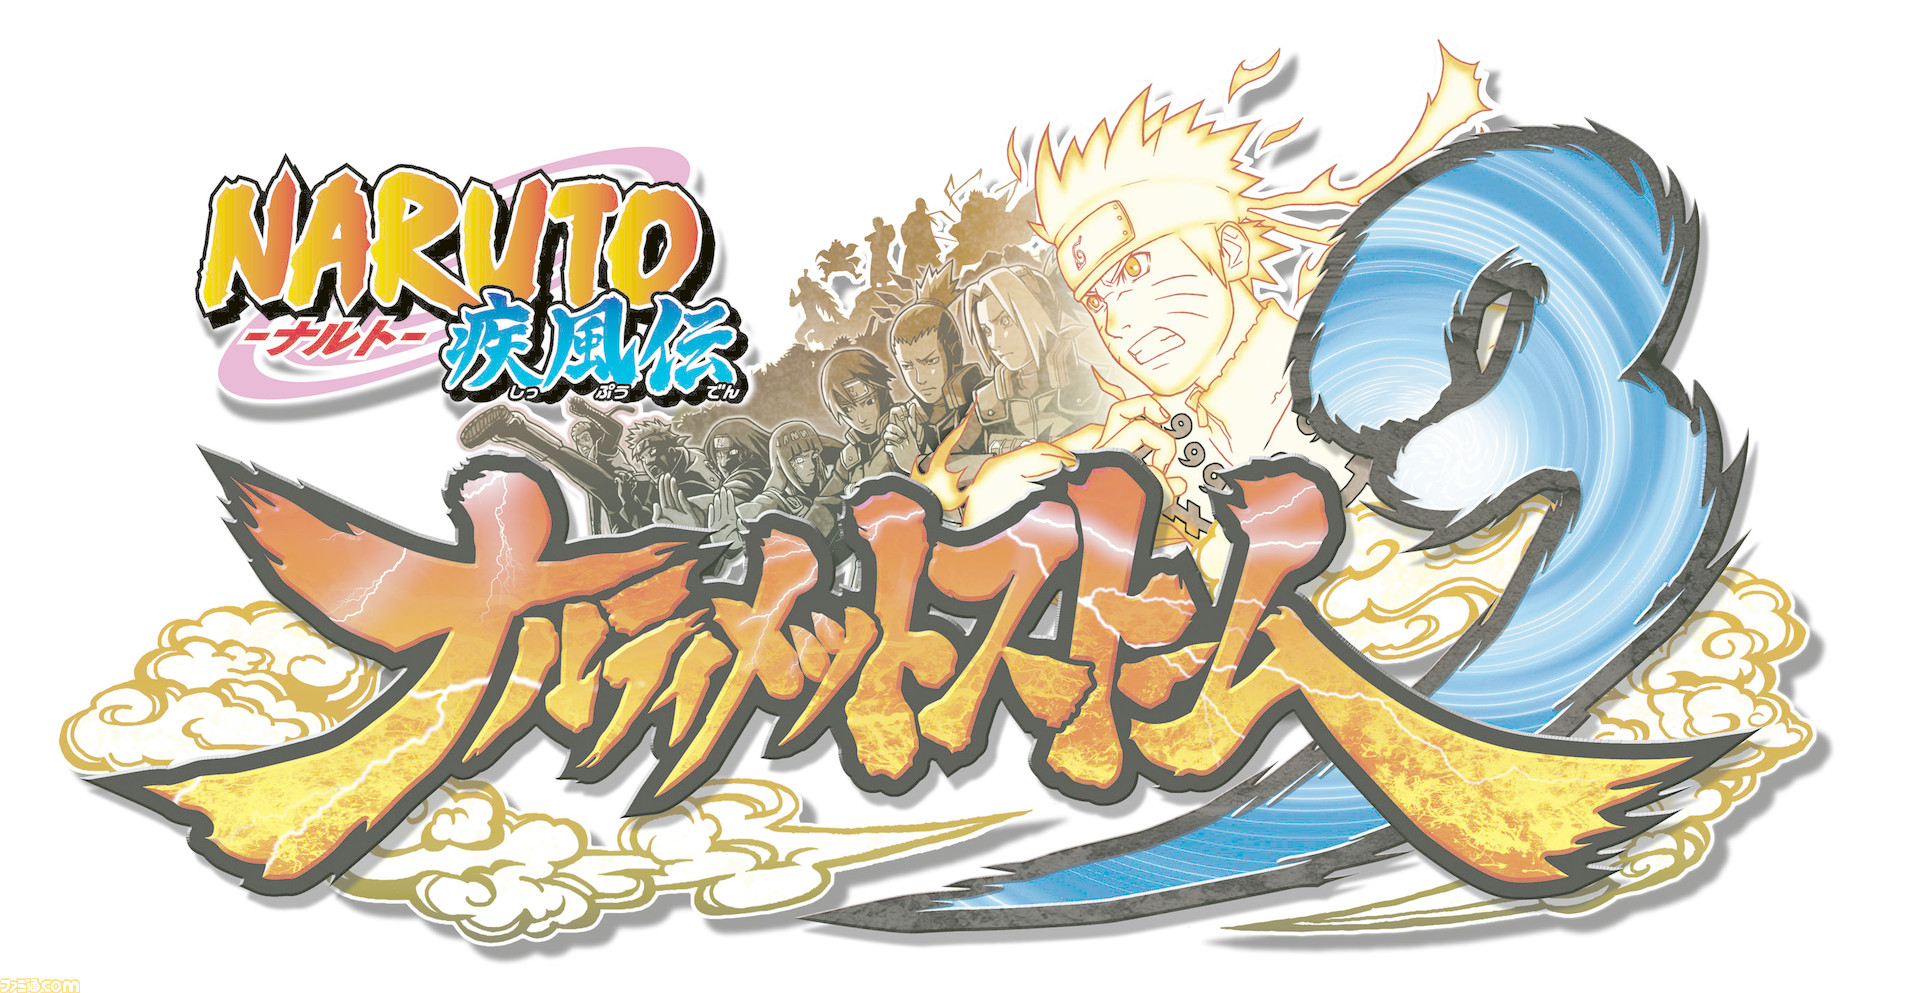 Naruto ナルト 疾風伝 ナルティメットストーム3 Tgs12バージョンの最新pvが公開 ファミ通 Com